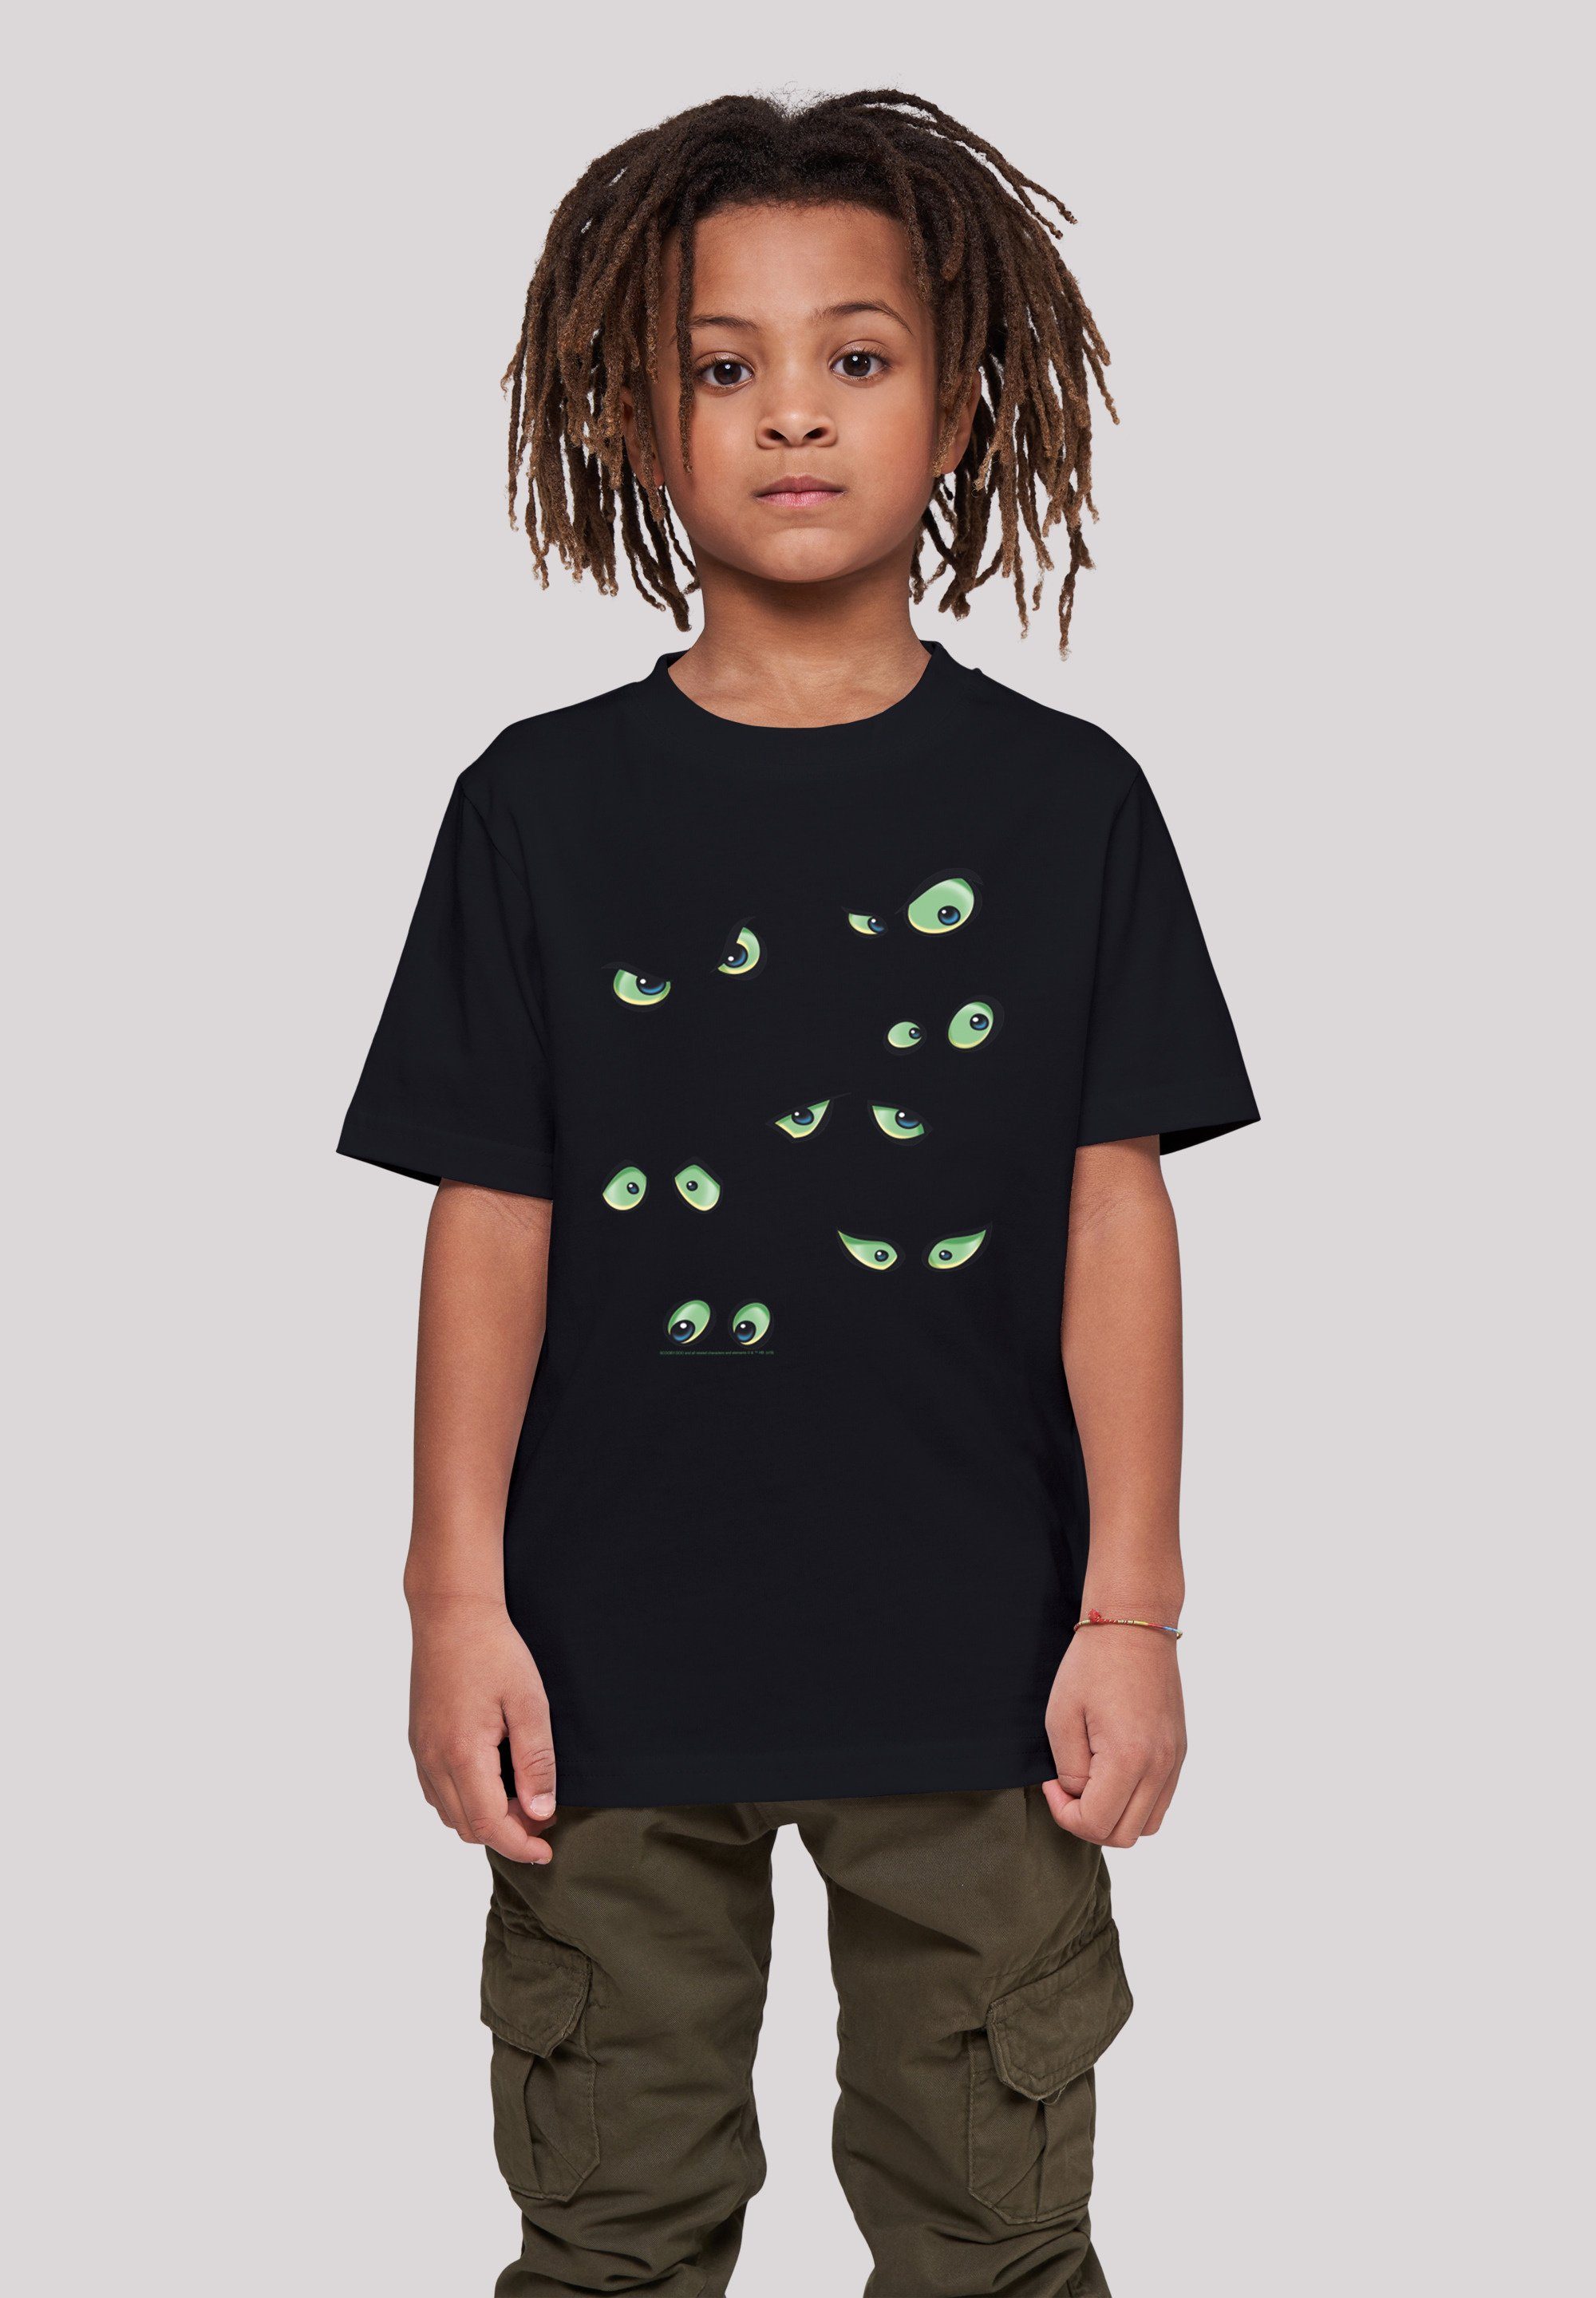 F4NT4STIC T-Shirt Scooby Doo Scary Eyes Unisex Kinder,Premium Merch,Jungen, Mädchen,Bedruckt